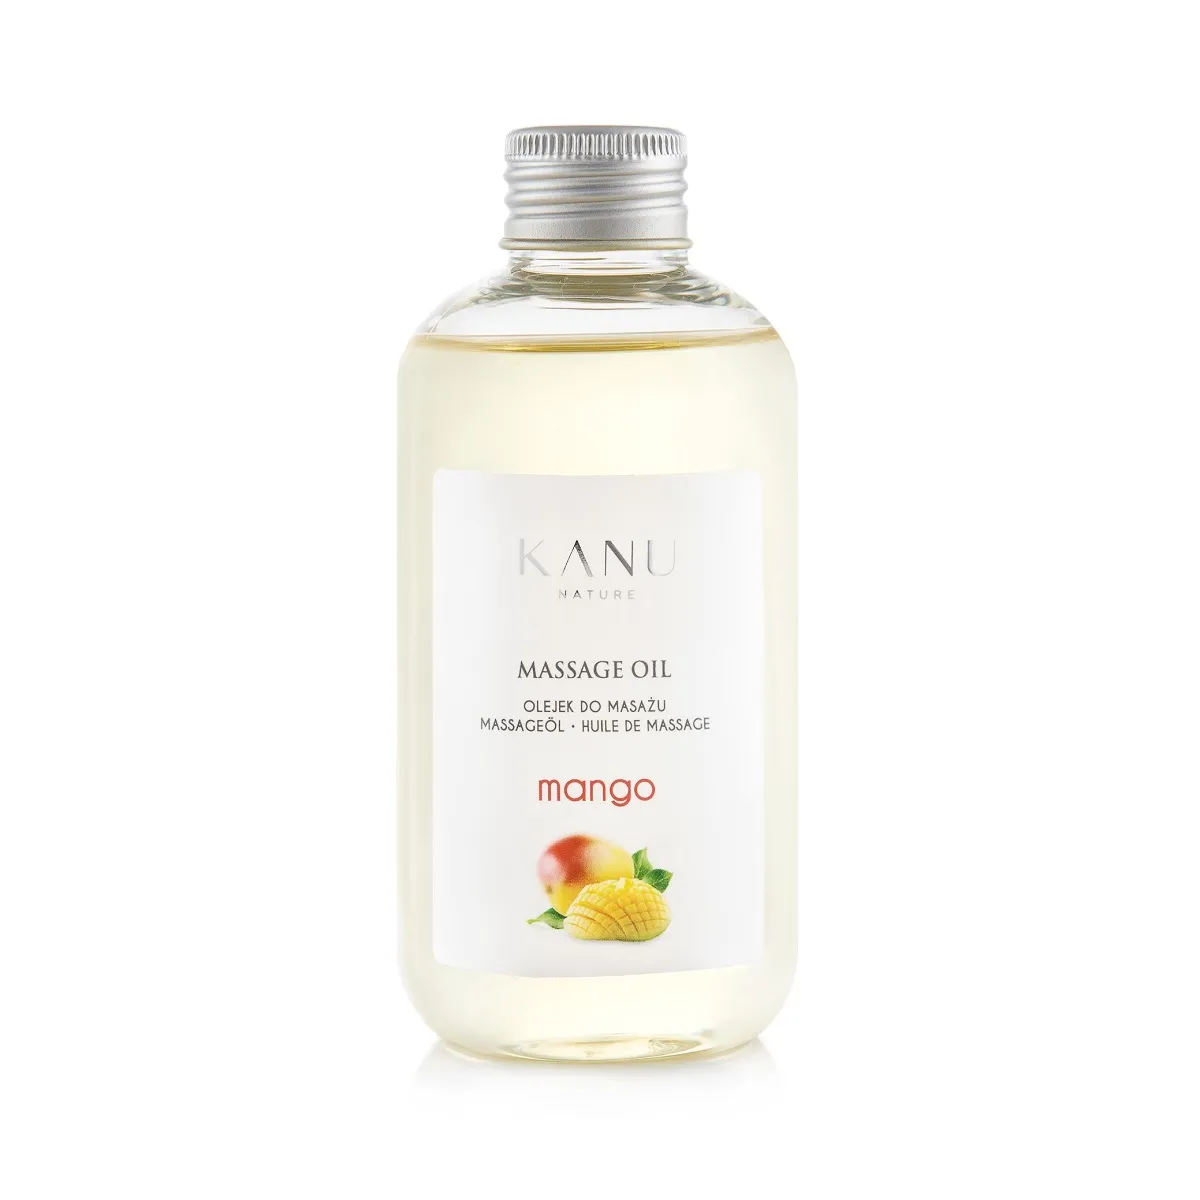 Kanu Nature olejek do masażu o zapachu mango, 200 ml